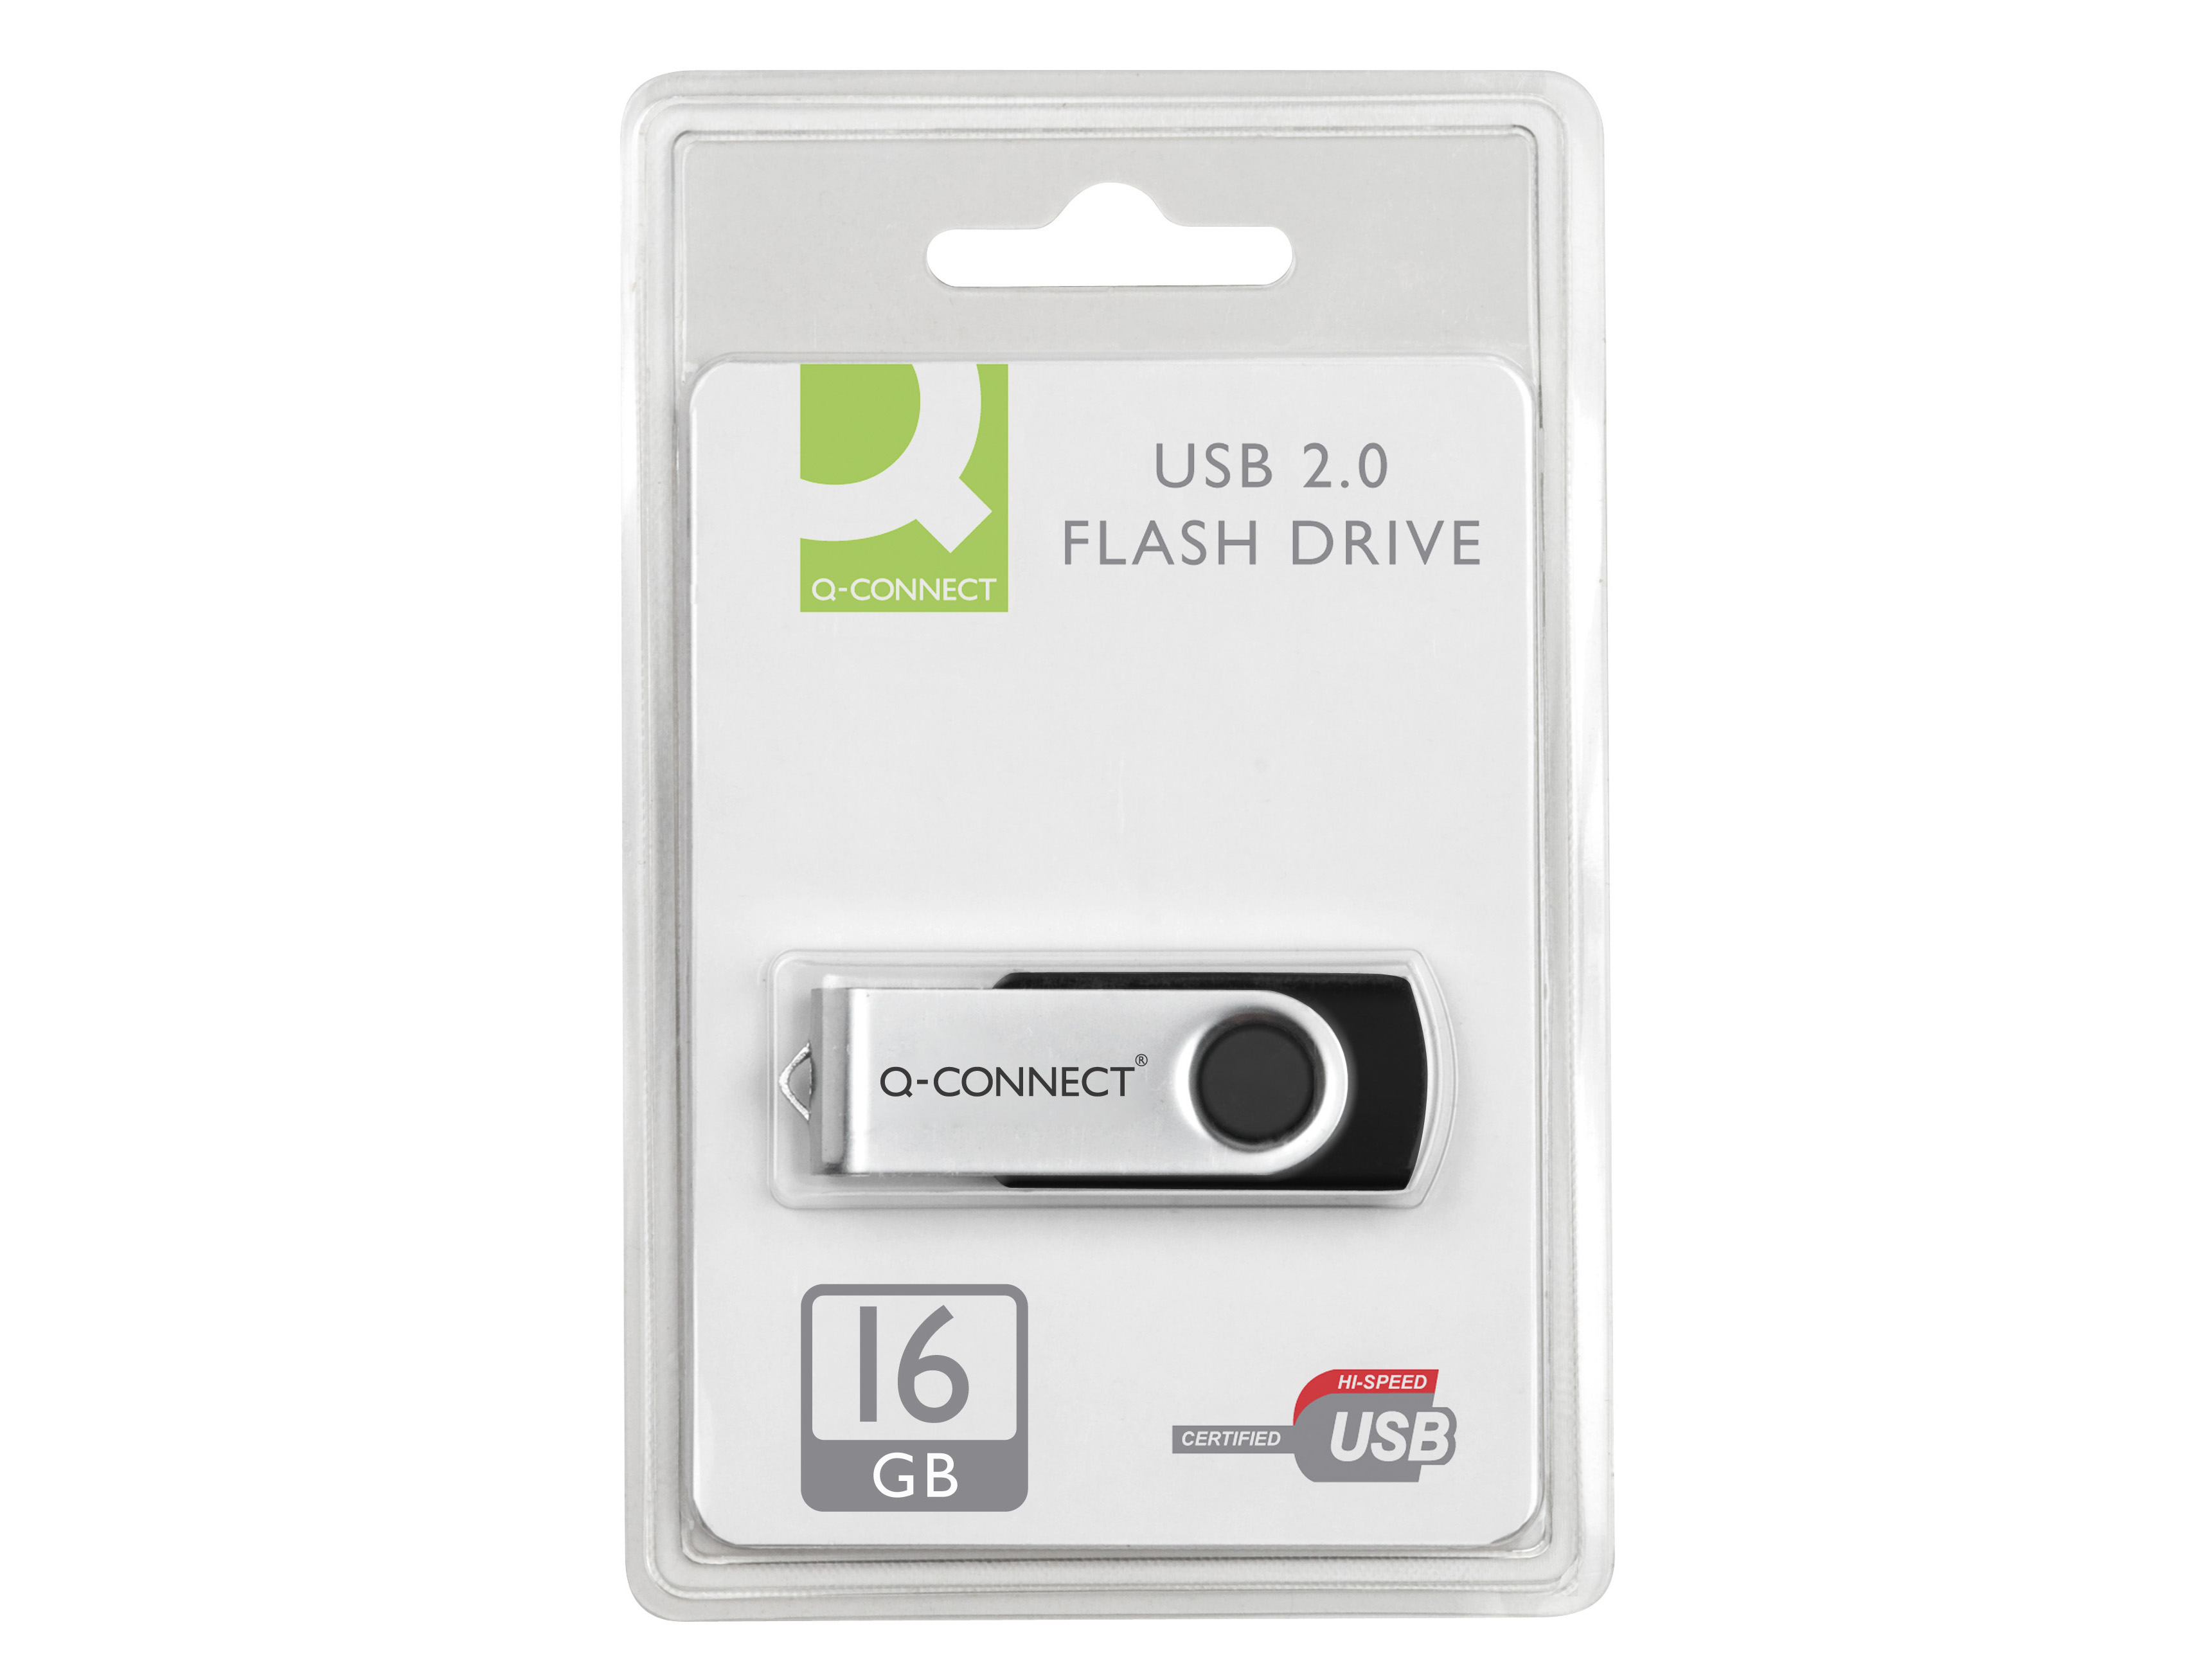 USBflash drive  16Gb  2.0  QConnect